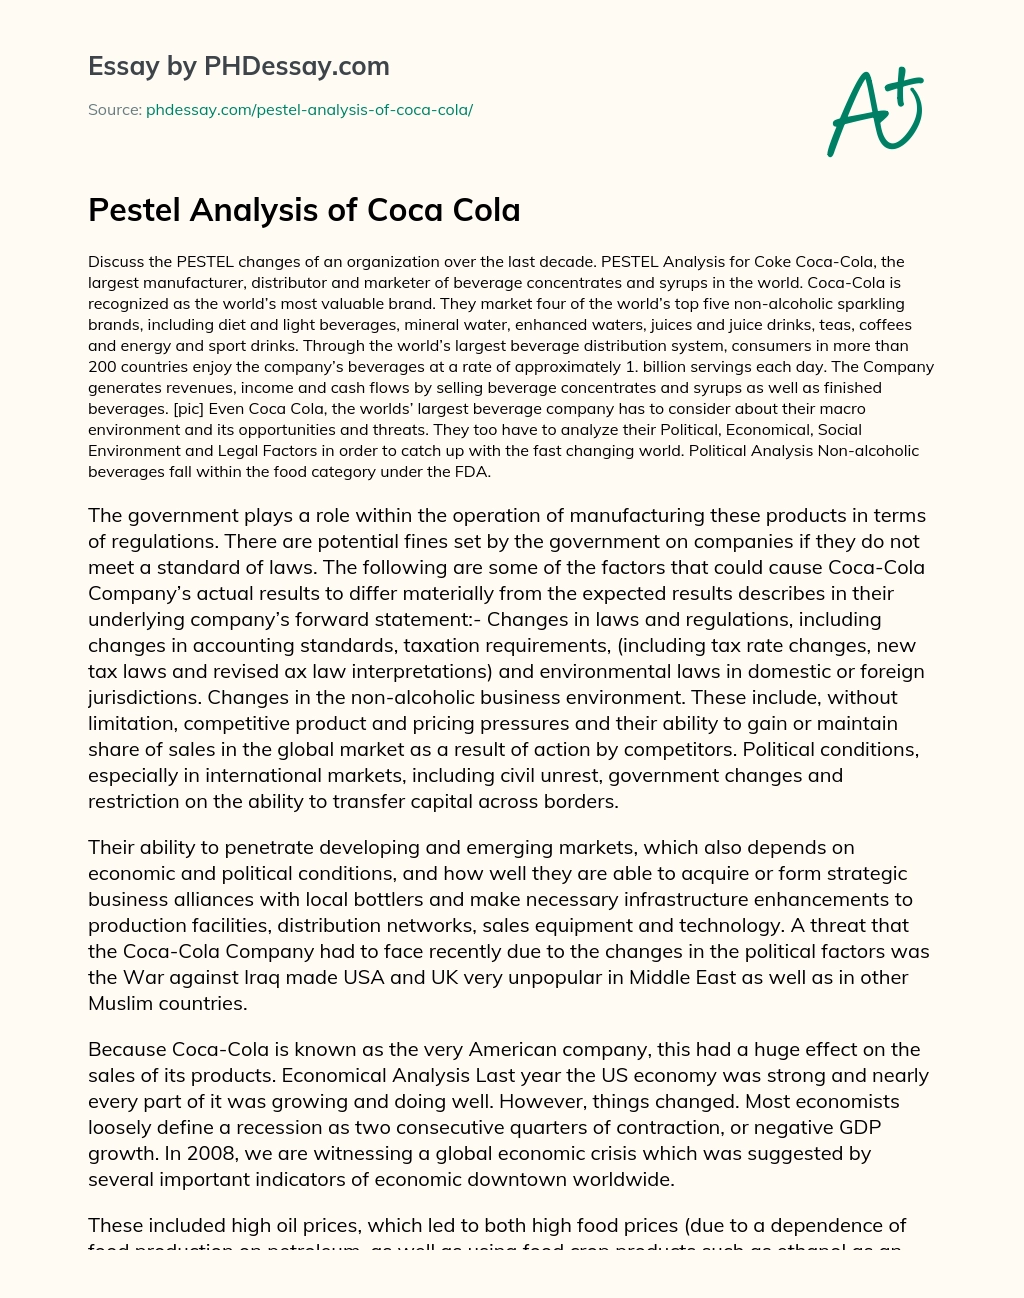 Pestel Analysis of Coca Cola essay